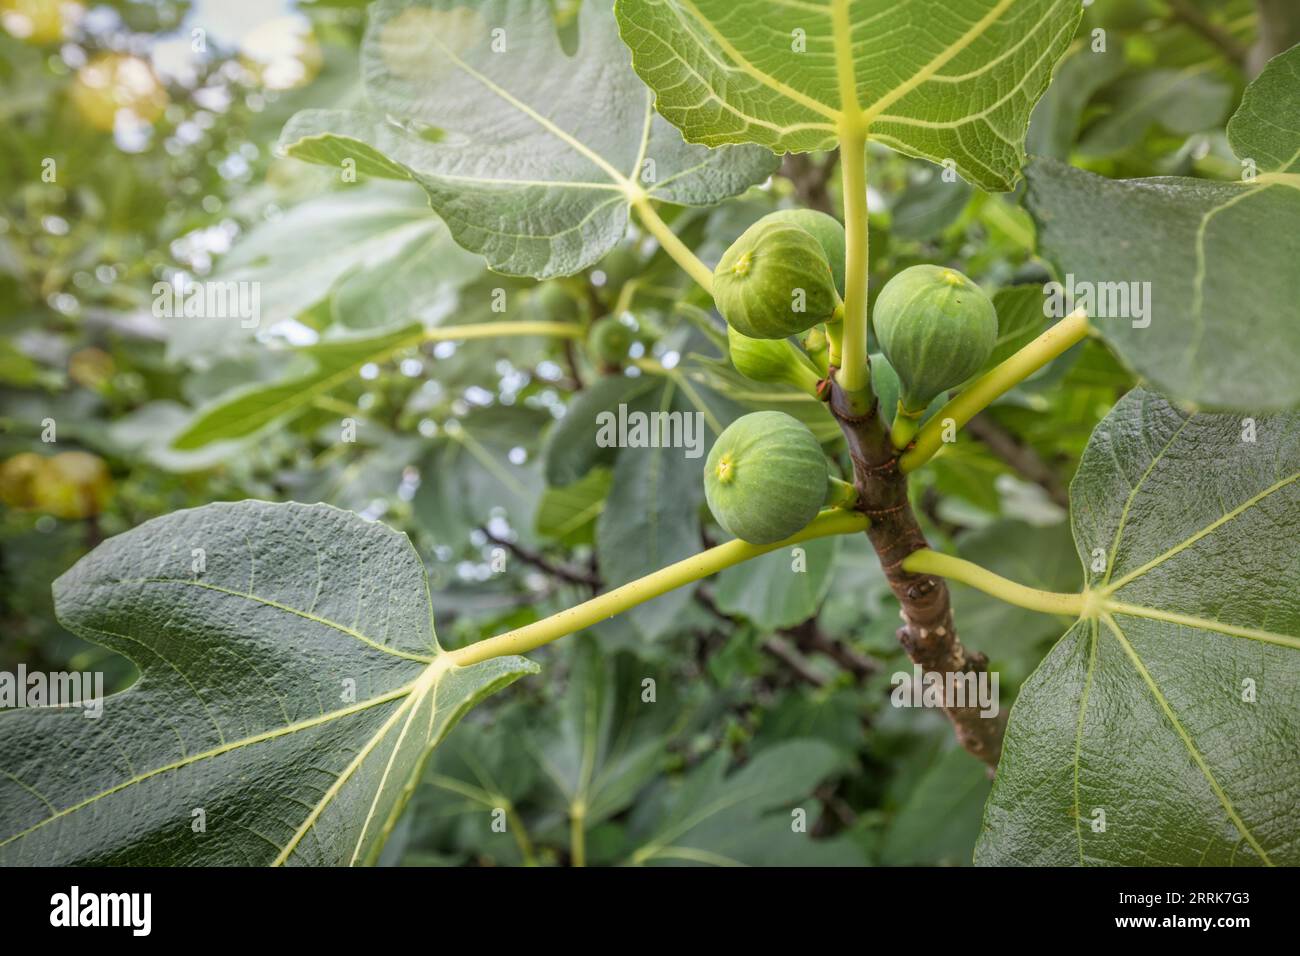 Croatia, Primorje-Gorski Kotar County, Krk island, Baska, fig tree, green foliage and ripening fruits Stock Photo